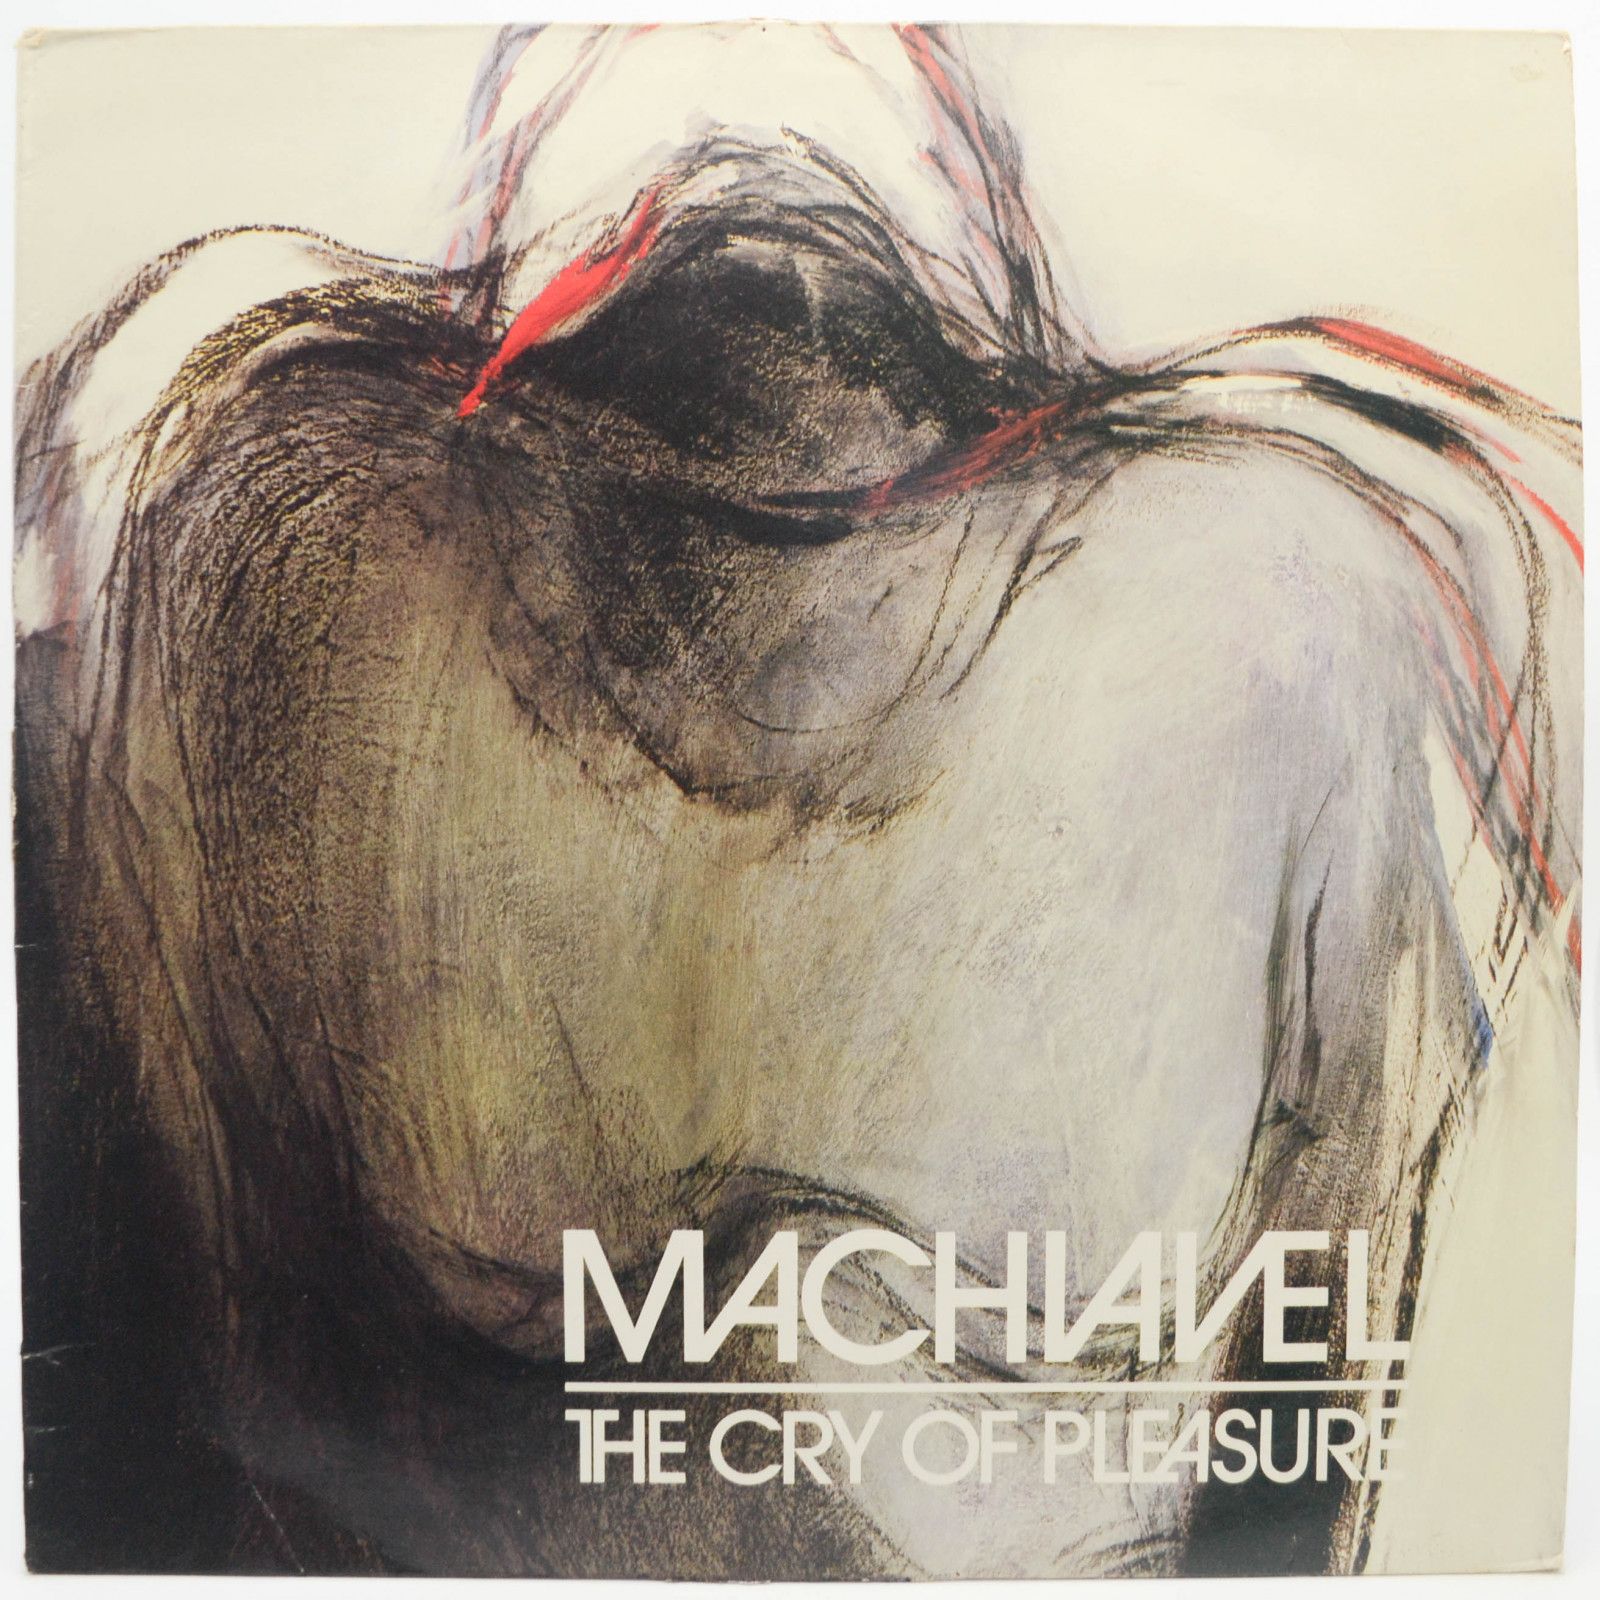 Machiavel — The Cry Of Pleasure, 1987